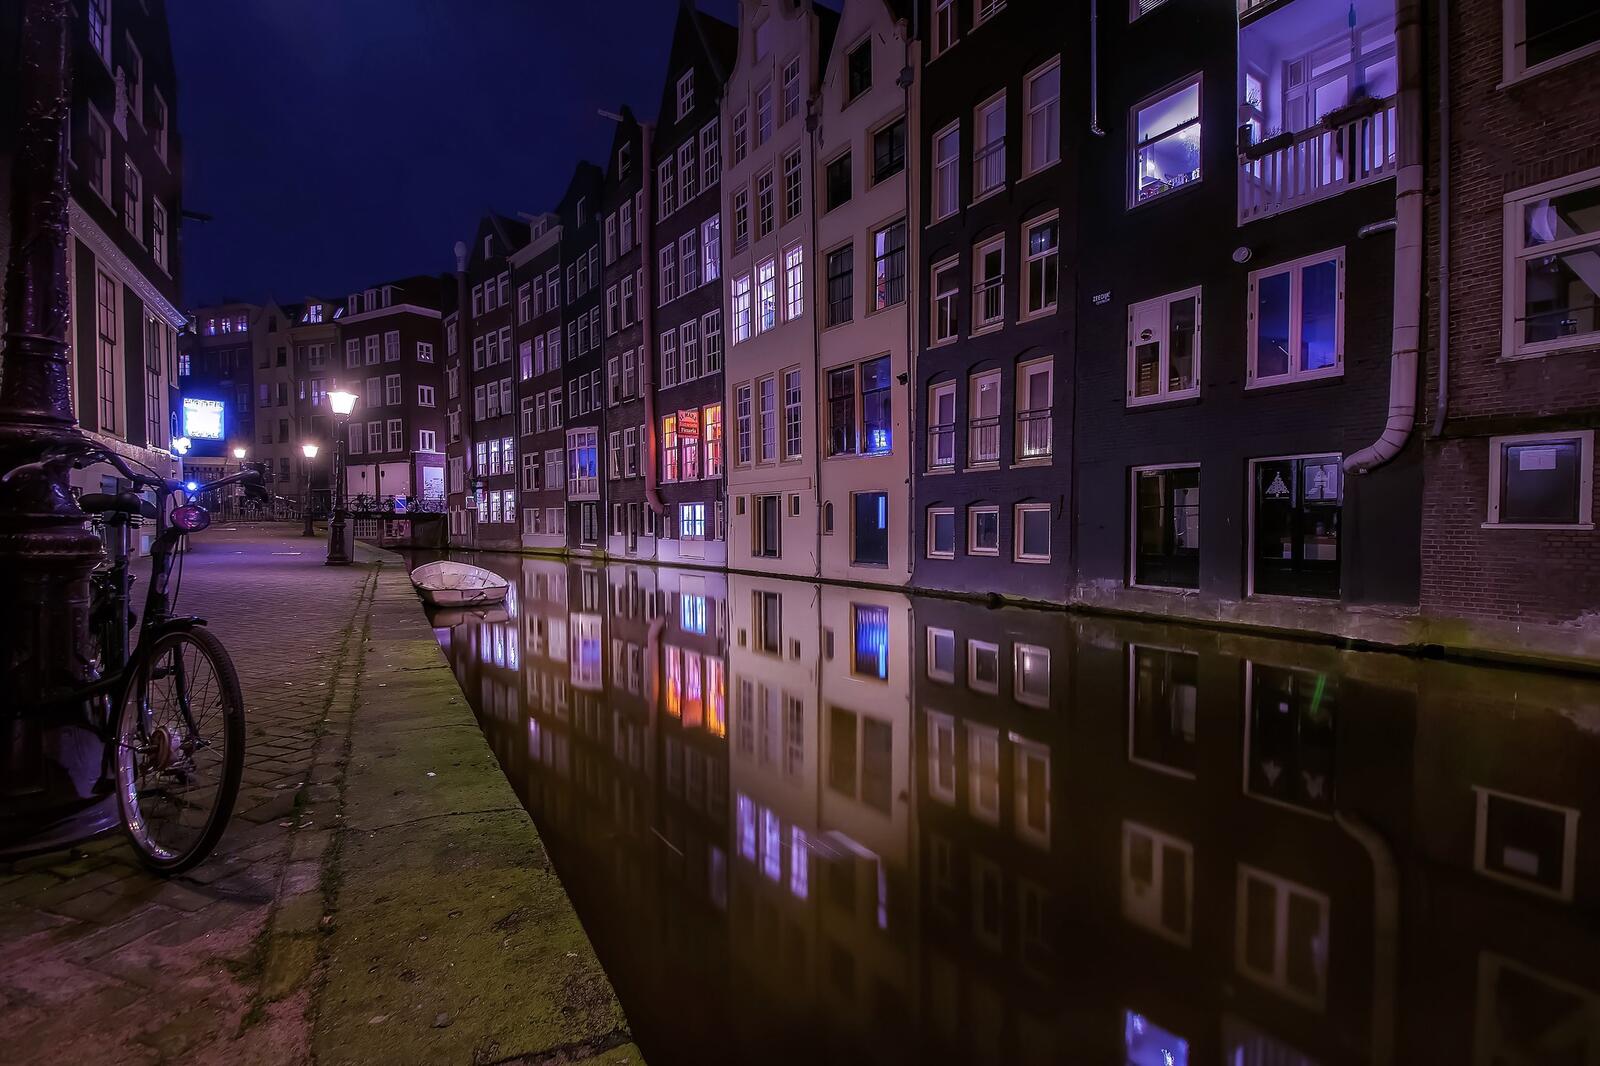 Wallpapers Amsterdam Netherlands night cities on the desktop